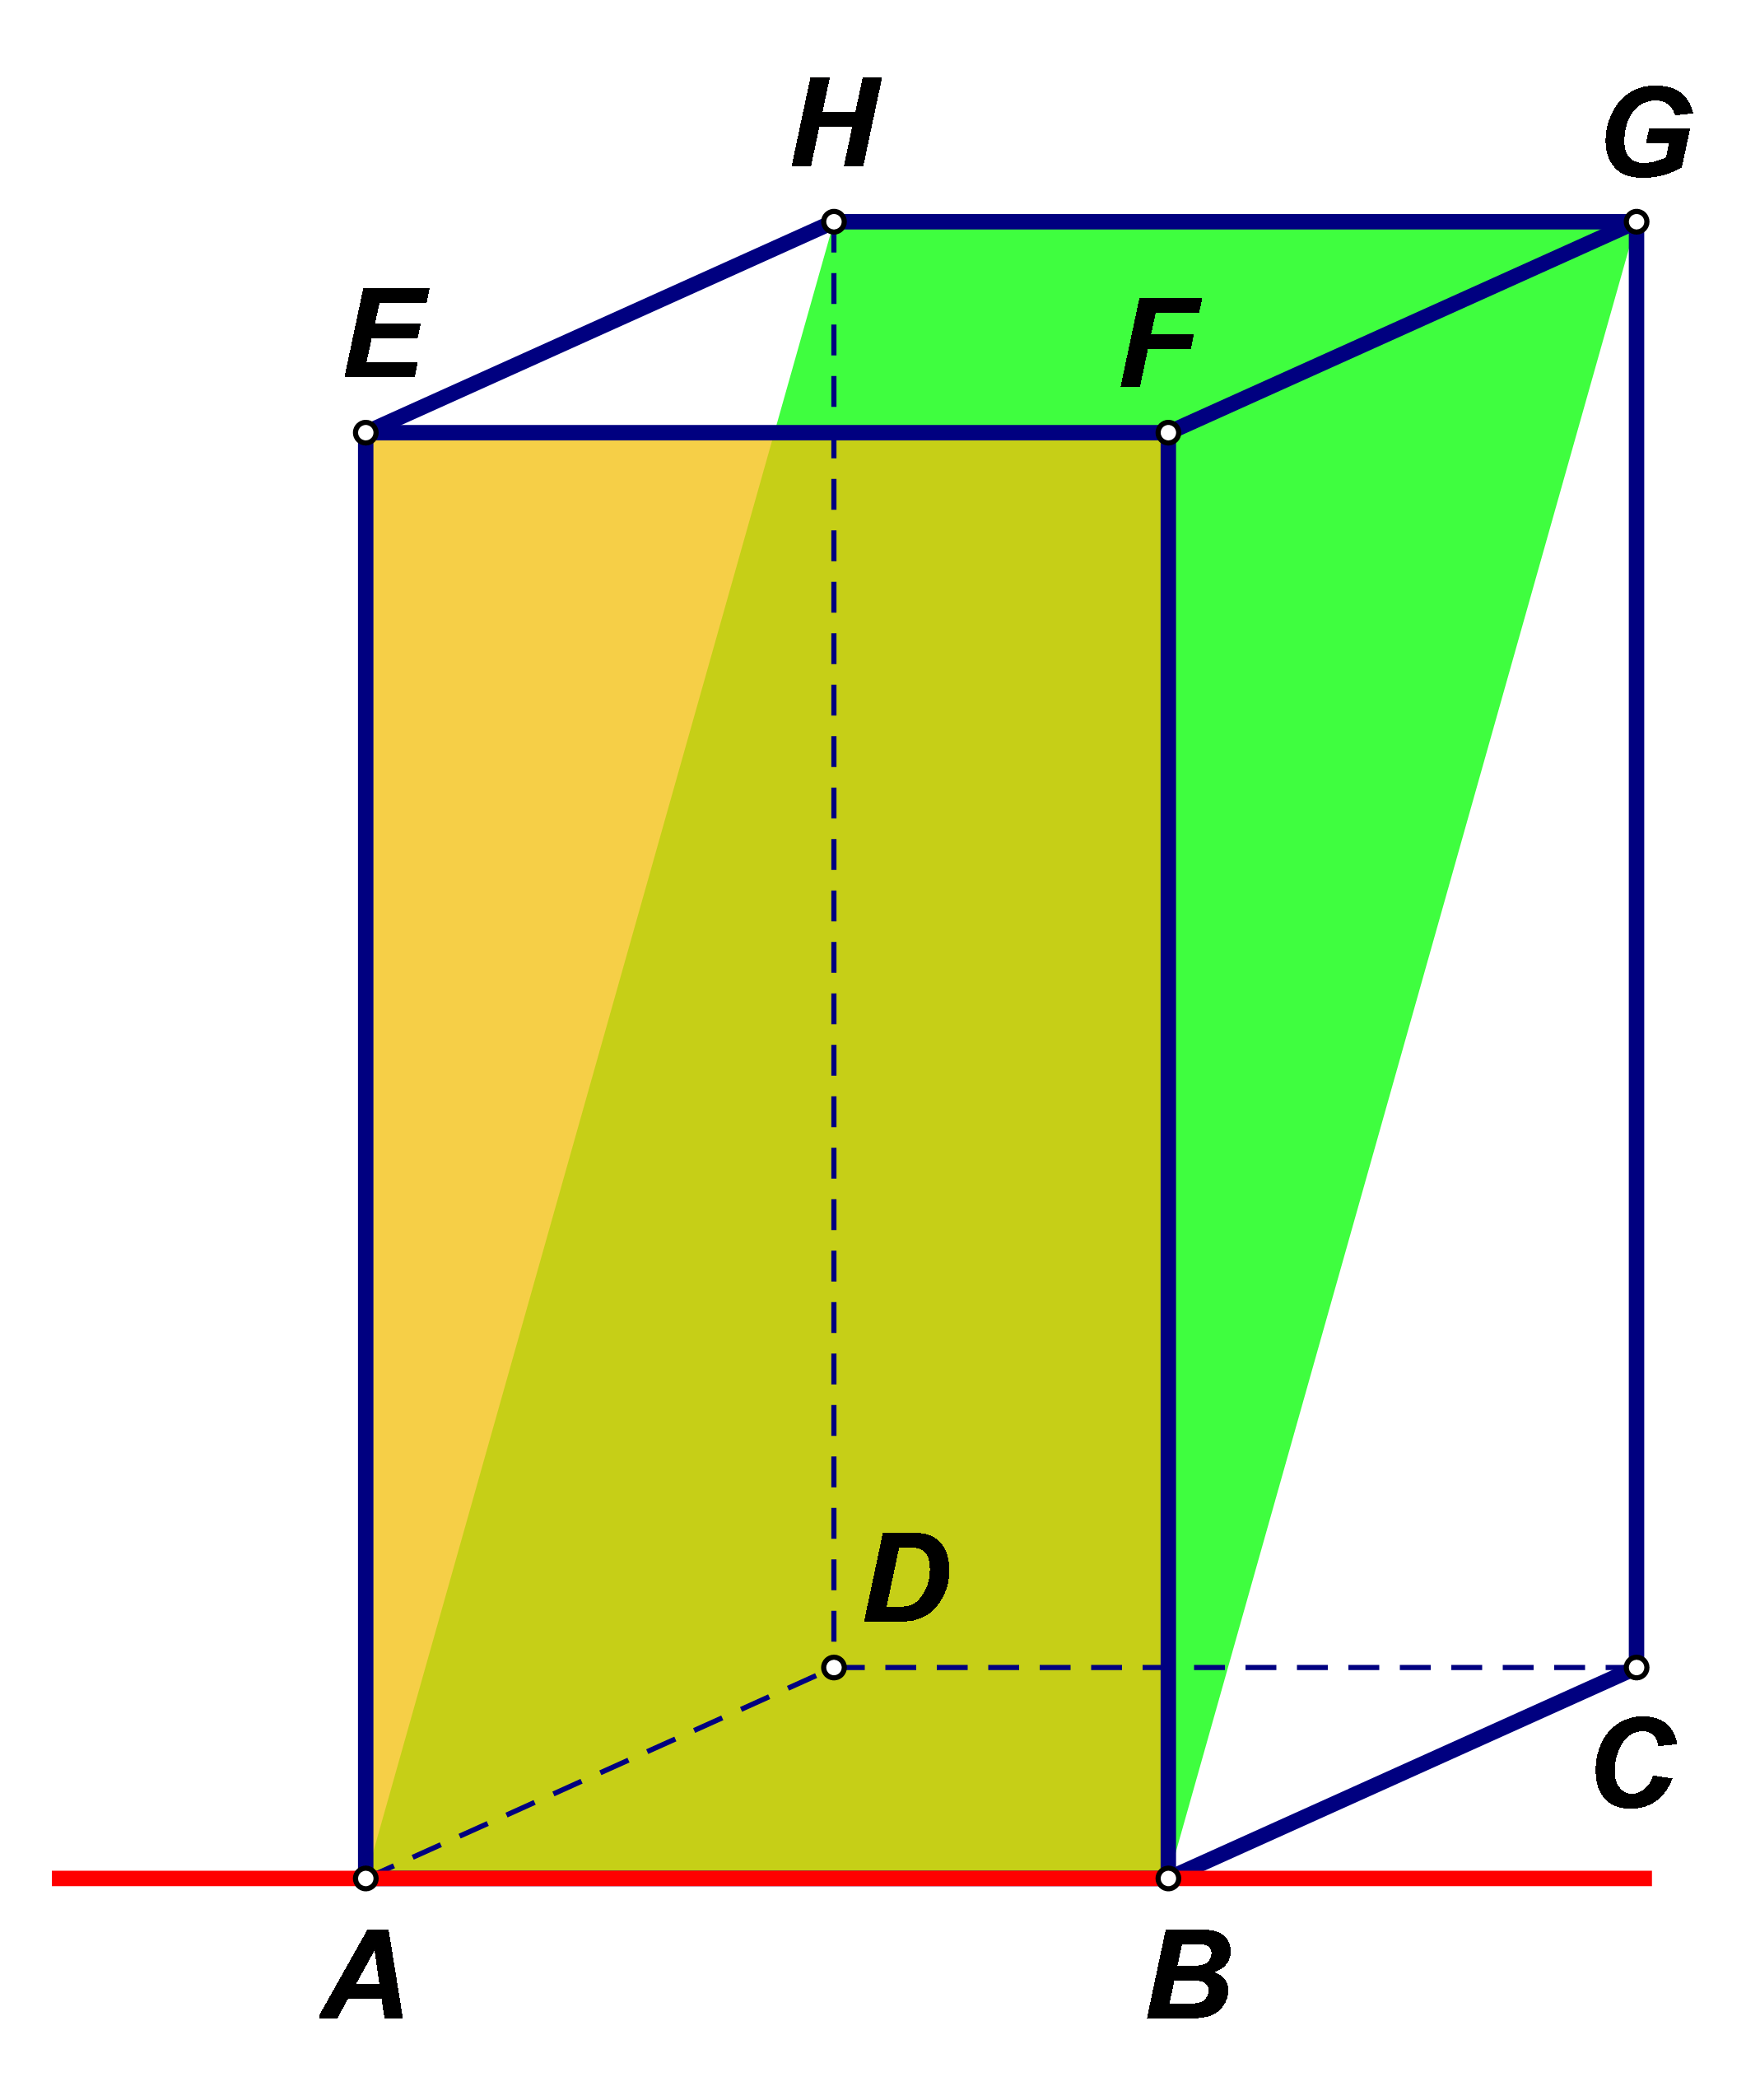 Na kvadru ABCDEFGH istaknute su ravnine ABF(E) i ABG(H). Te se ravnine sijeku po pravcu AB.